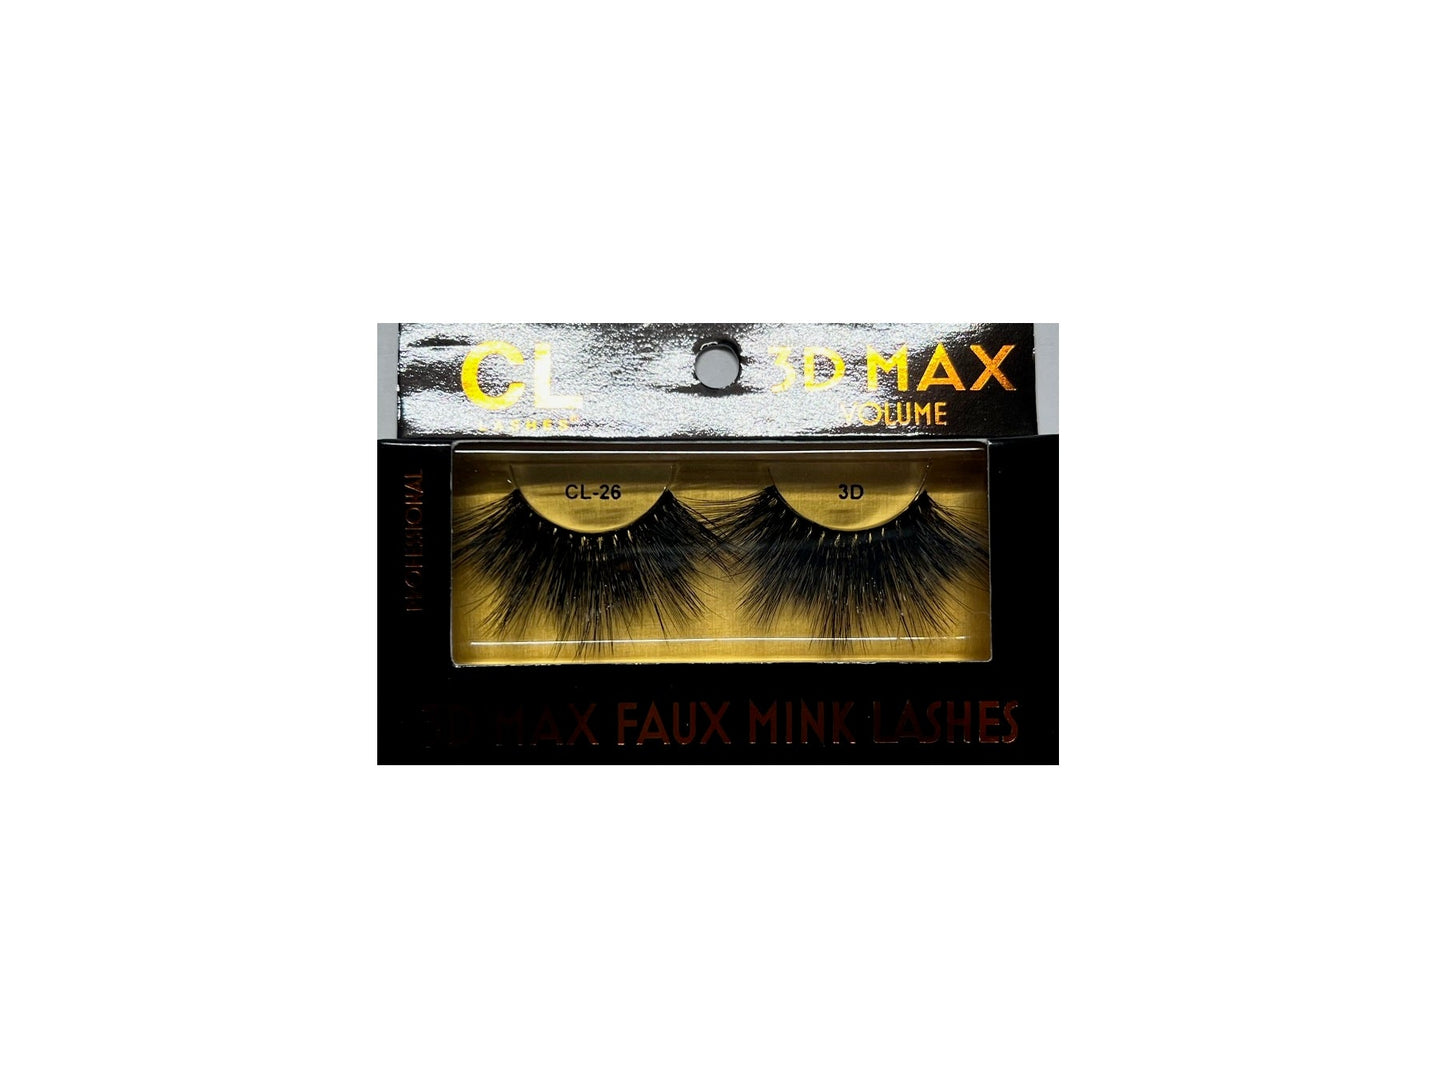 [WHOLESALE] CL 3D MAX VOLUME EYELASHES CL-26